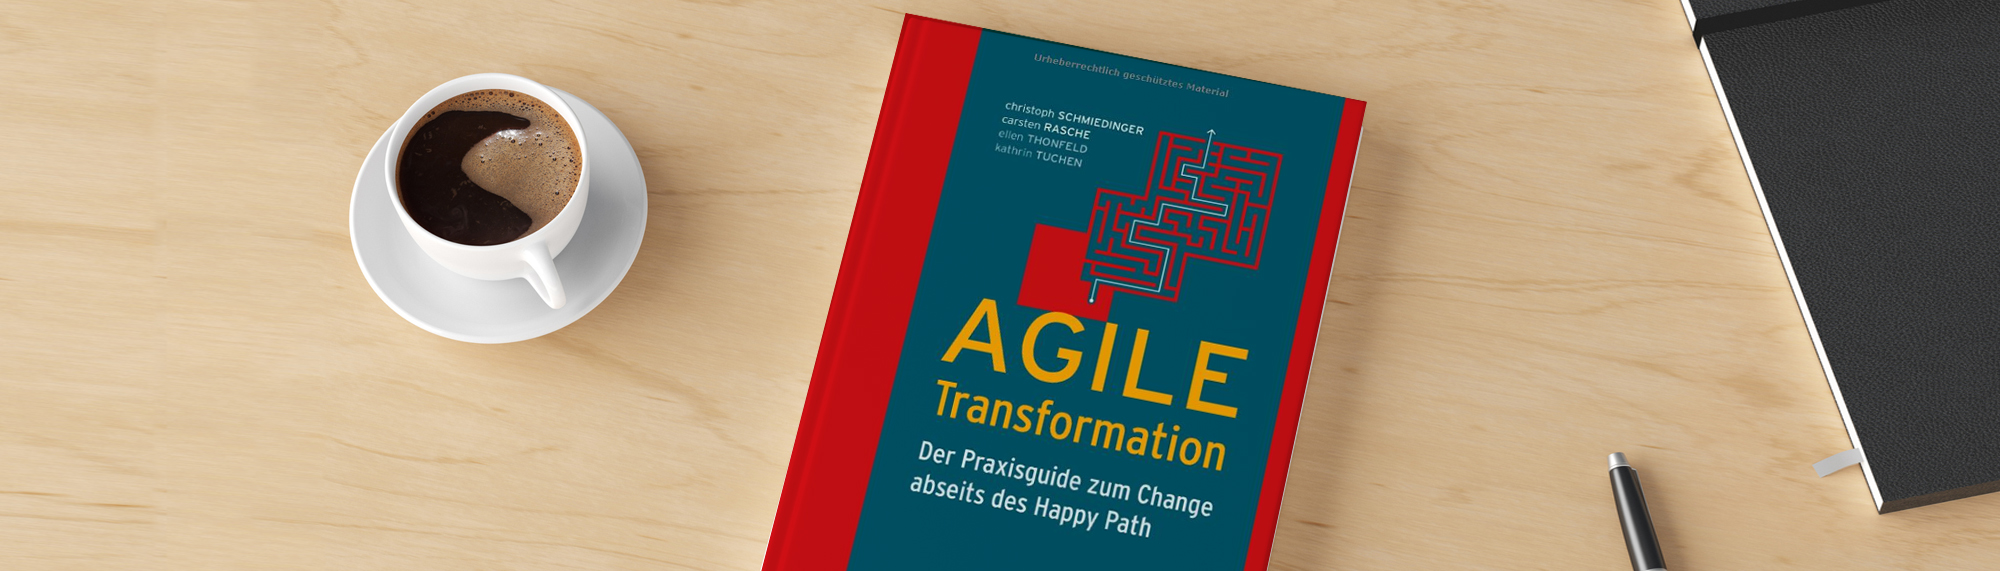 Buchvorstellung: Agile Transformation | IAPM